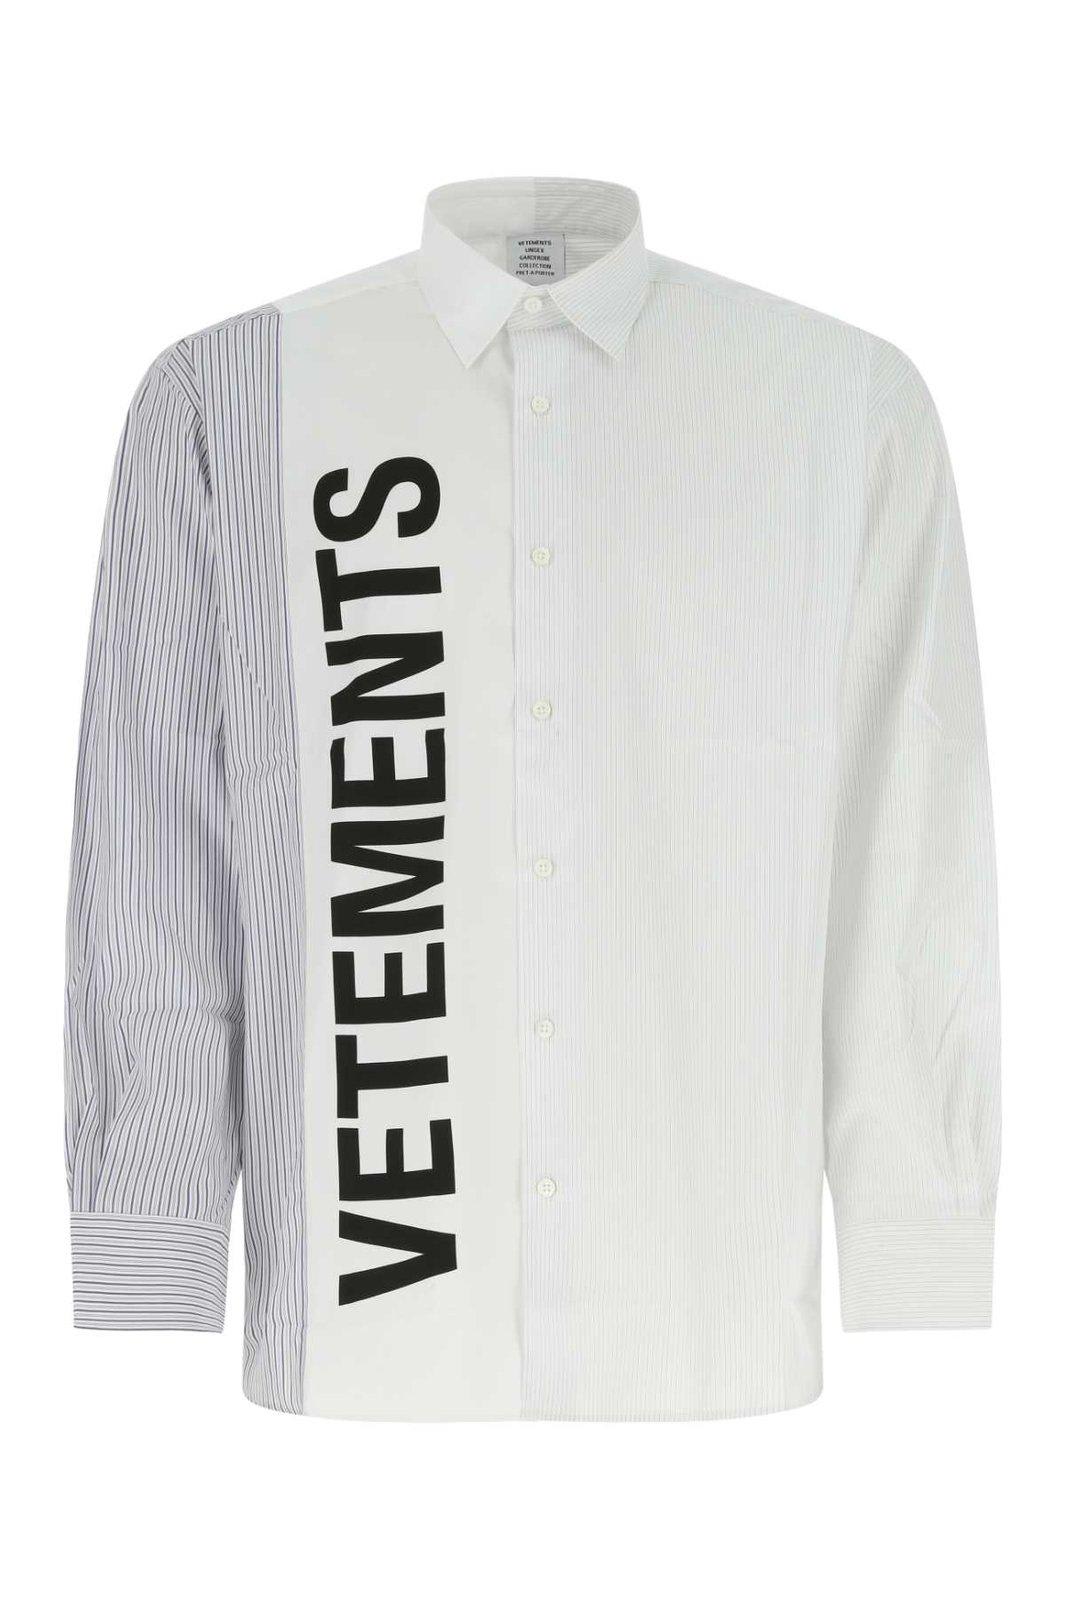 VETEMENTS Logo Printed Striped Long-sleeved Shirt